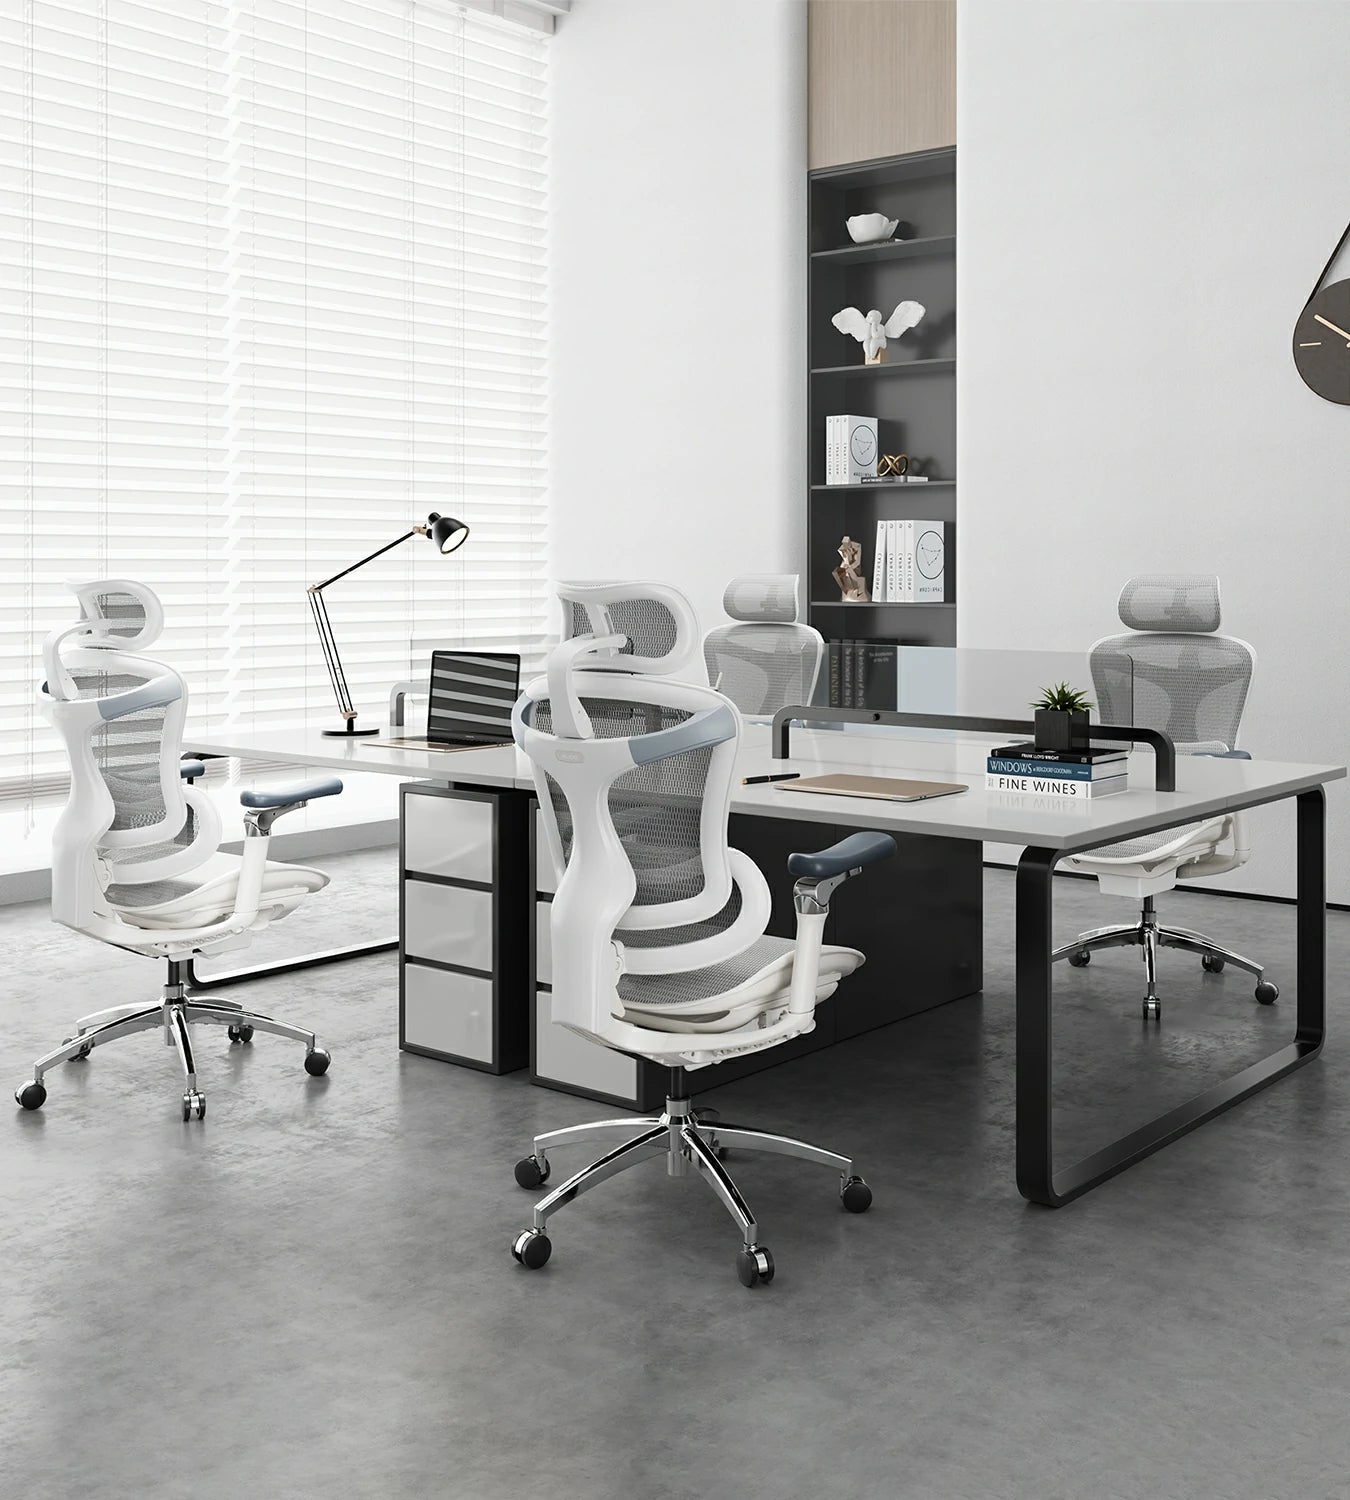  SIHOO Doro C300 Ergonomic Office Chair with Ultra Soft